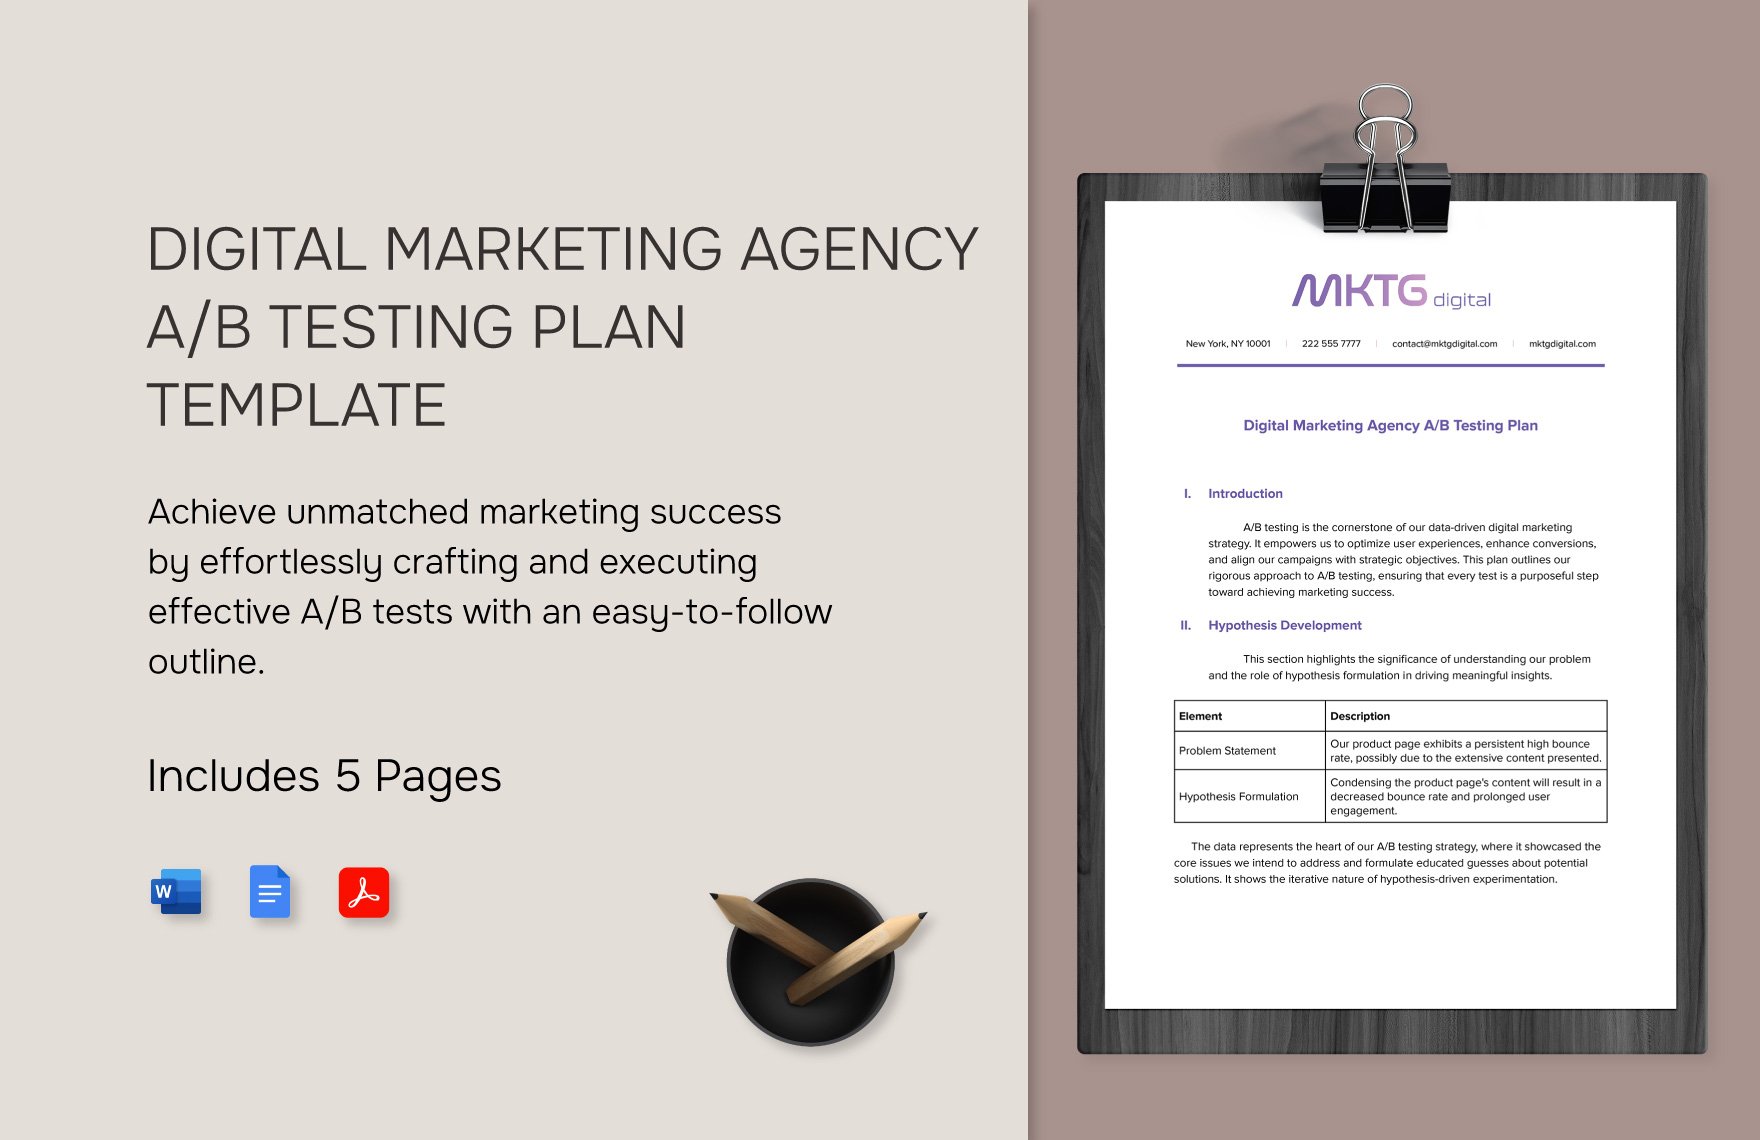 Digital Marketing Agency A/B Testing Plan Template